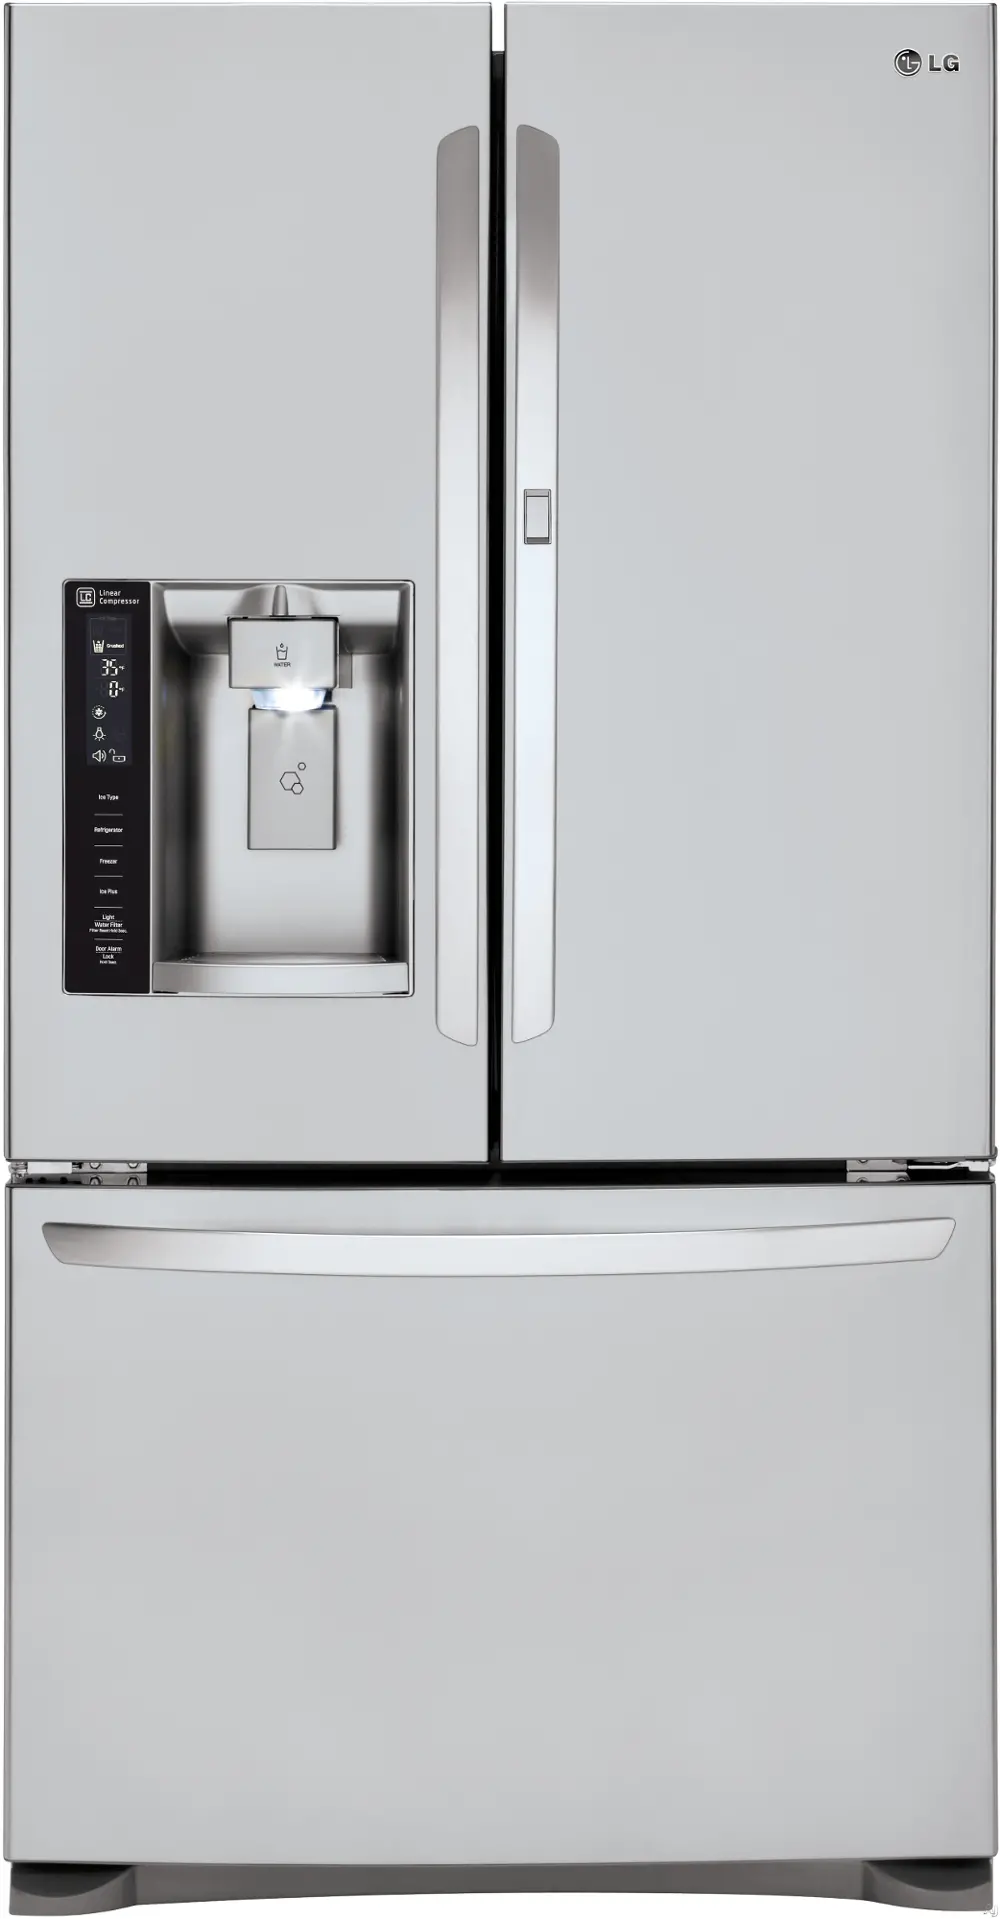 LFXS24566S LG Stainless Steel French Door Refrigerator - 36 Inch-1